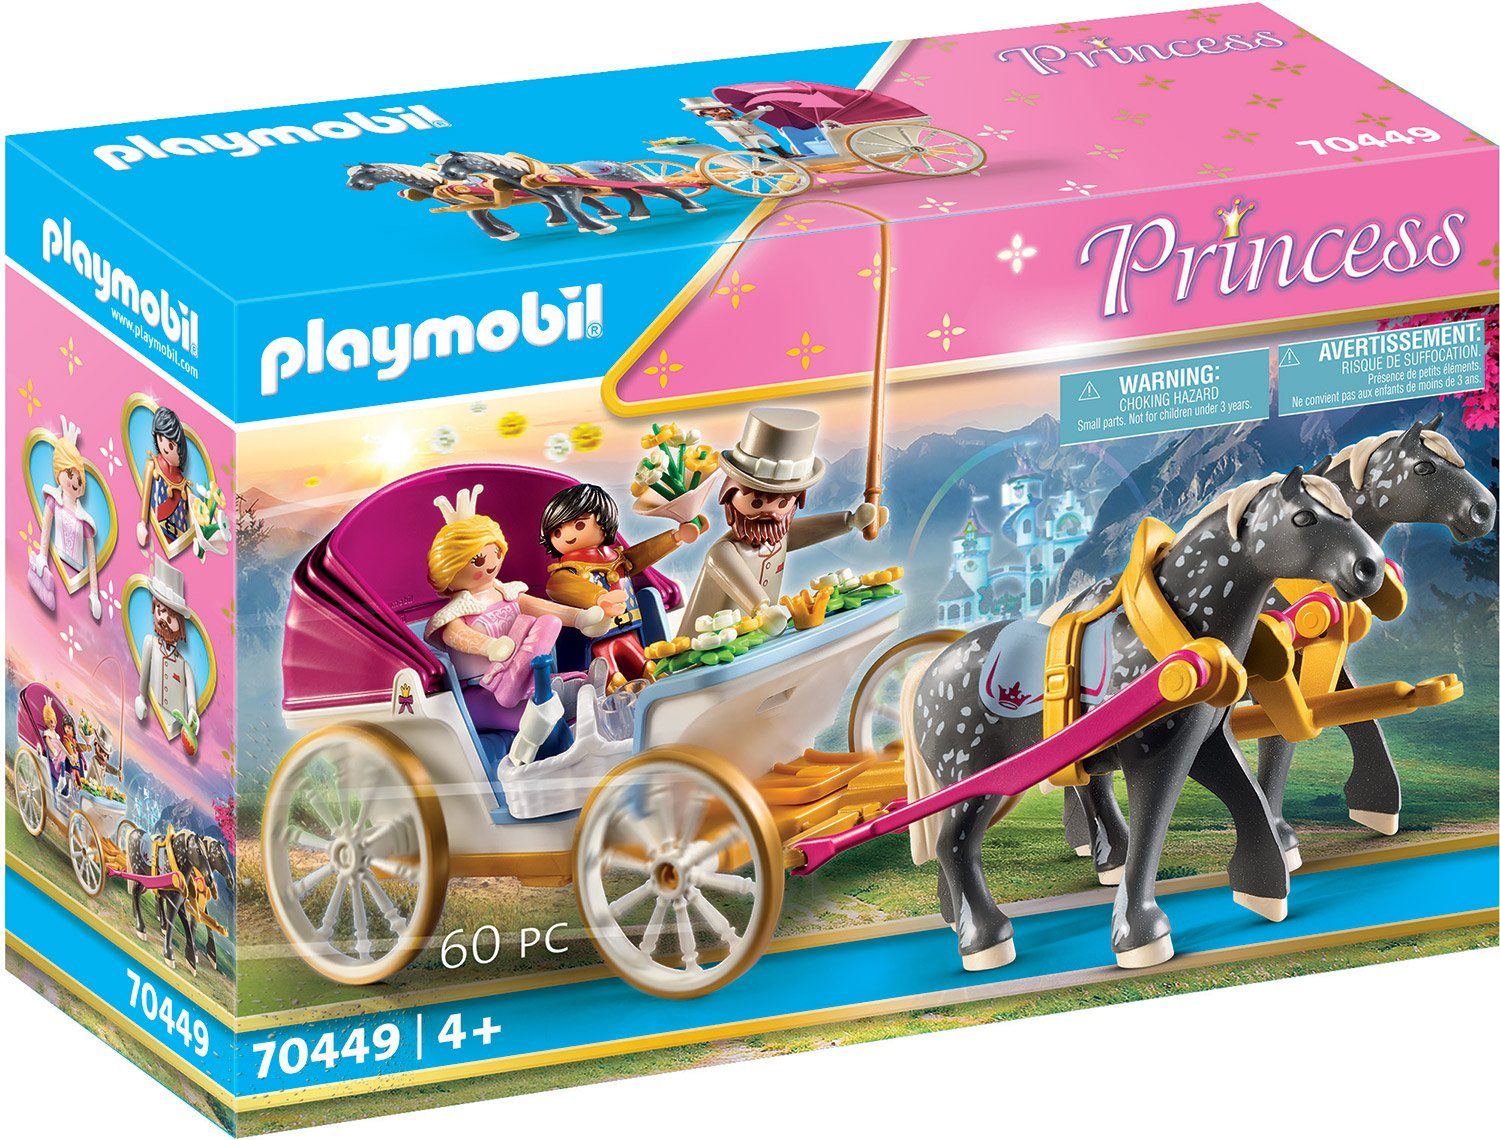 (60 St), Germany Konstruktions-Spielset (70449), Made Playmobil® Romantische Princess, Pferdekutsche in